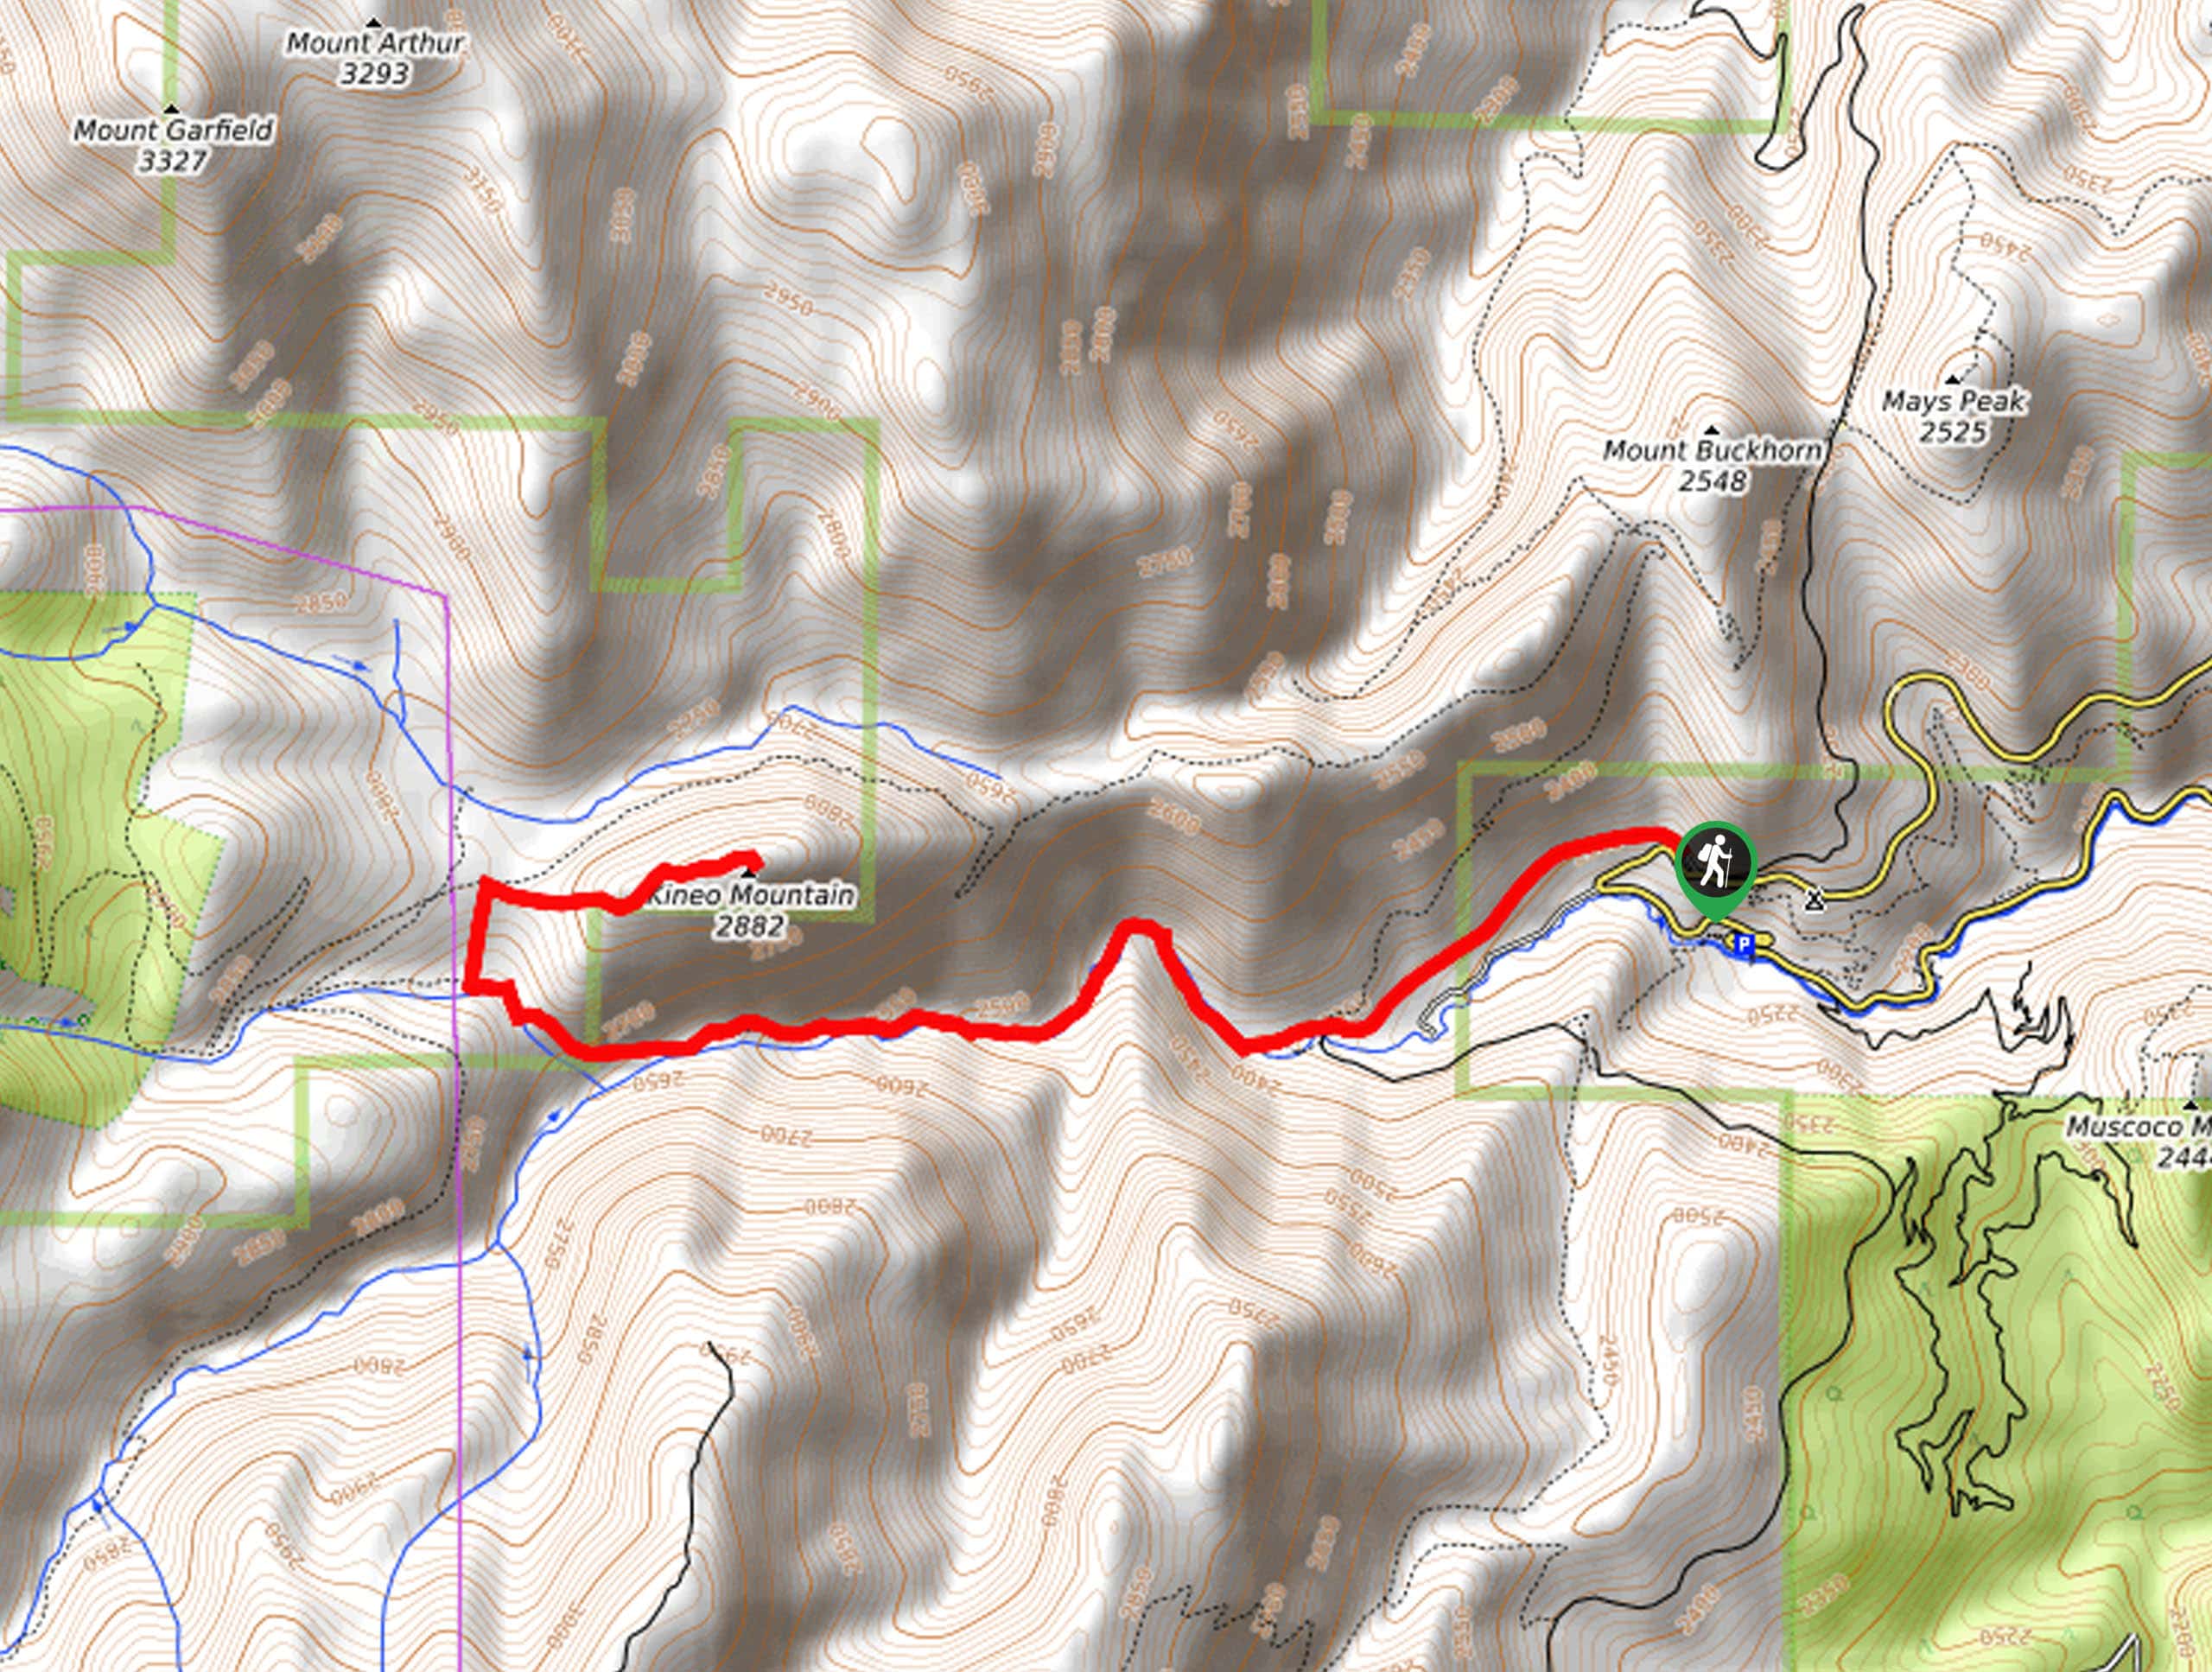 Kineo Mountain via Seven Bridges Trail Map